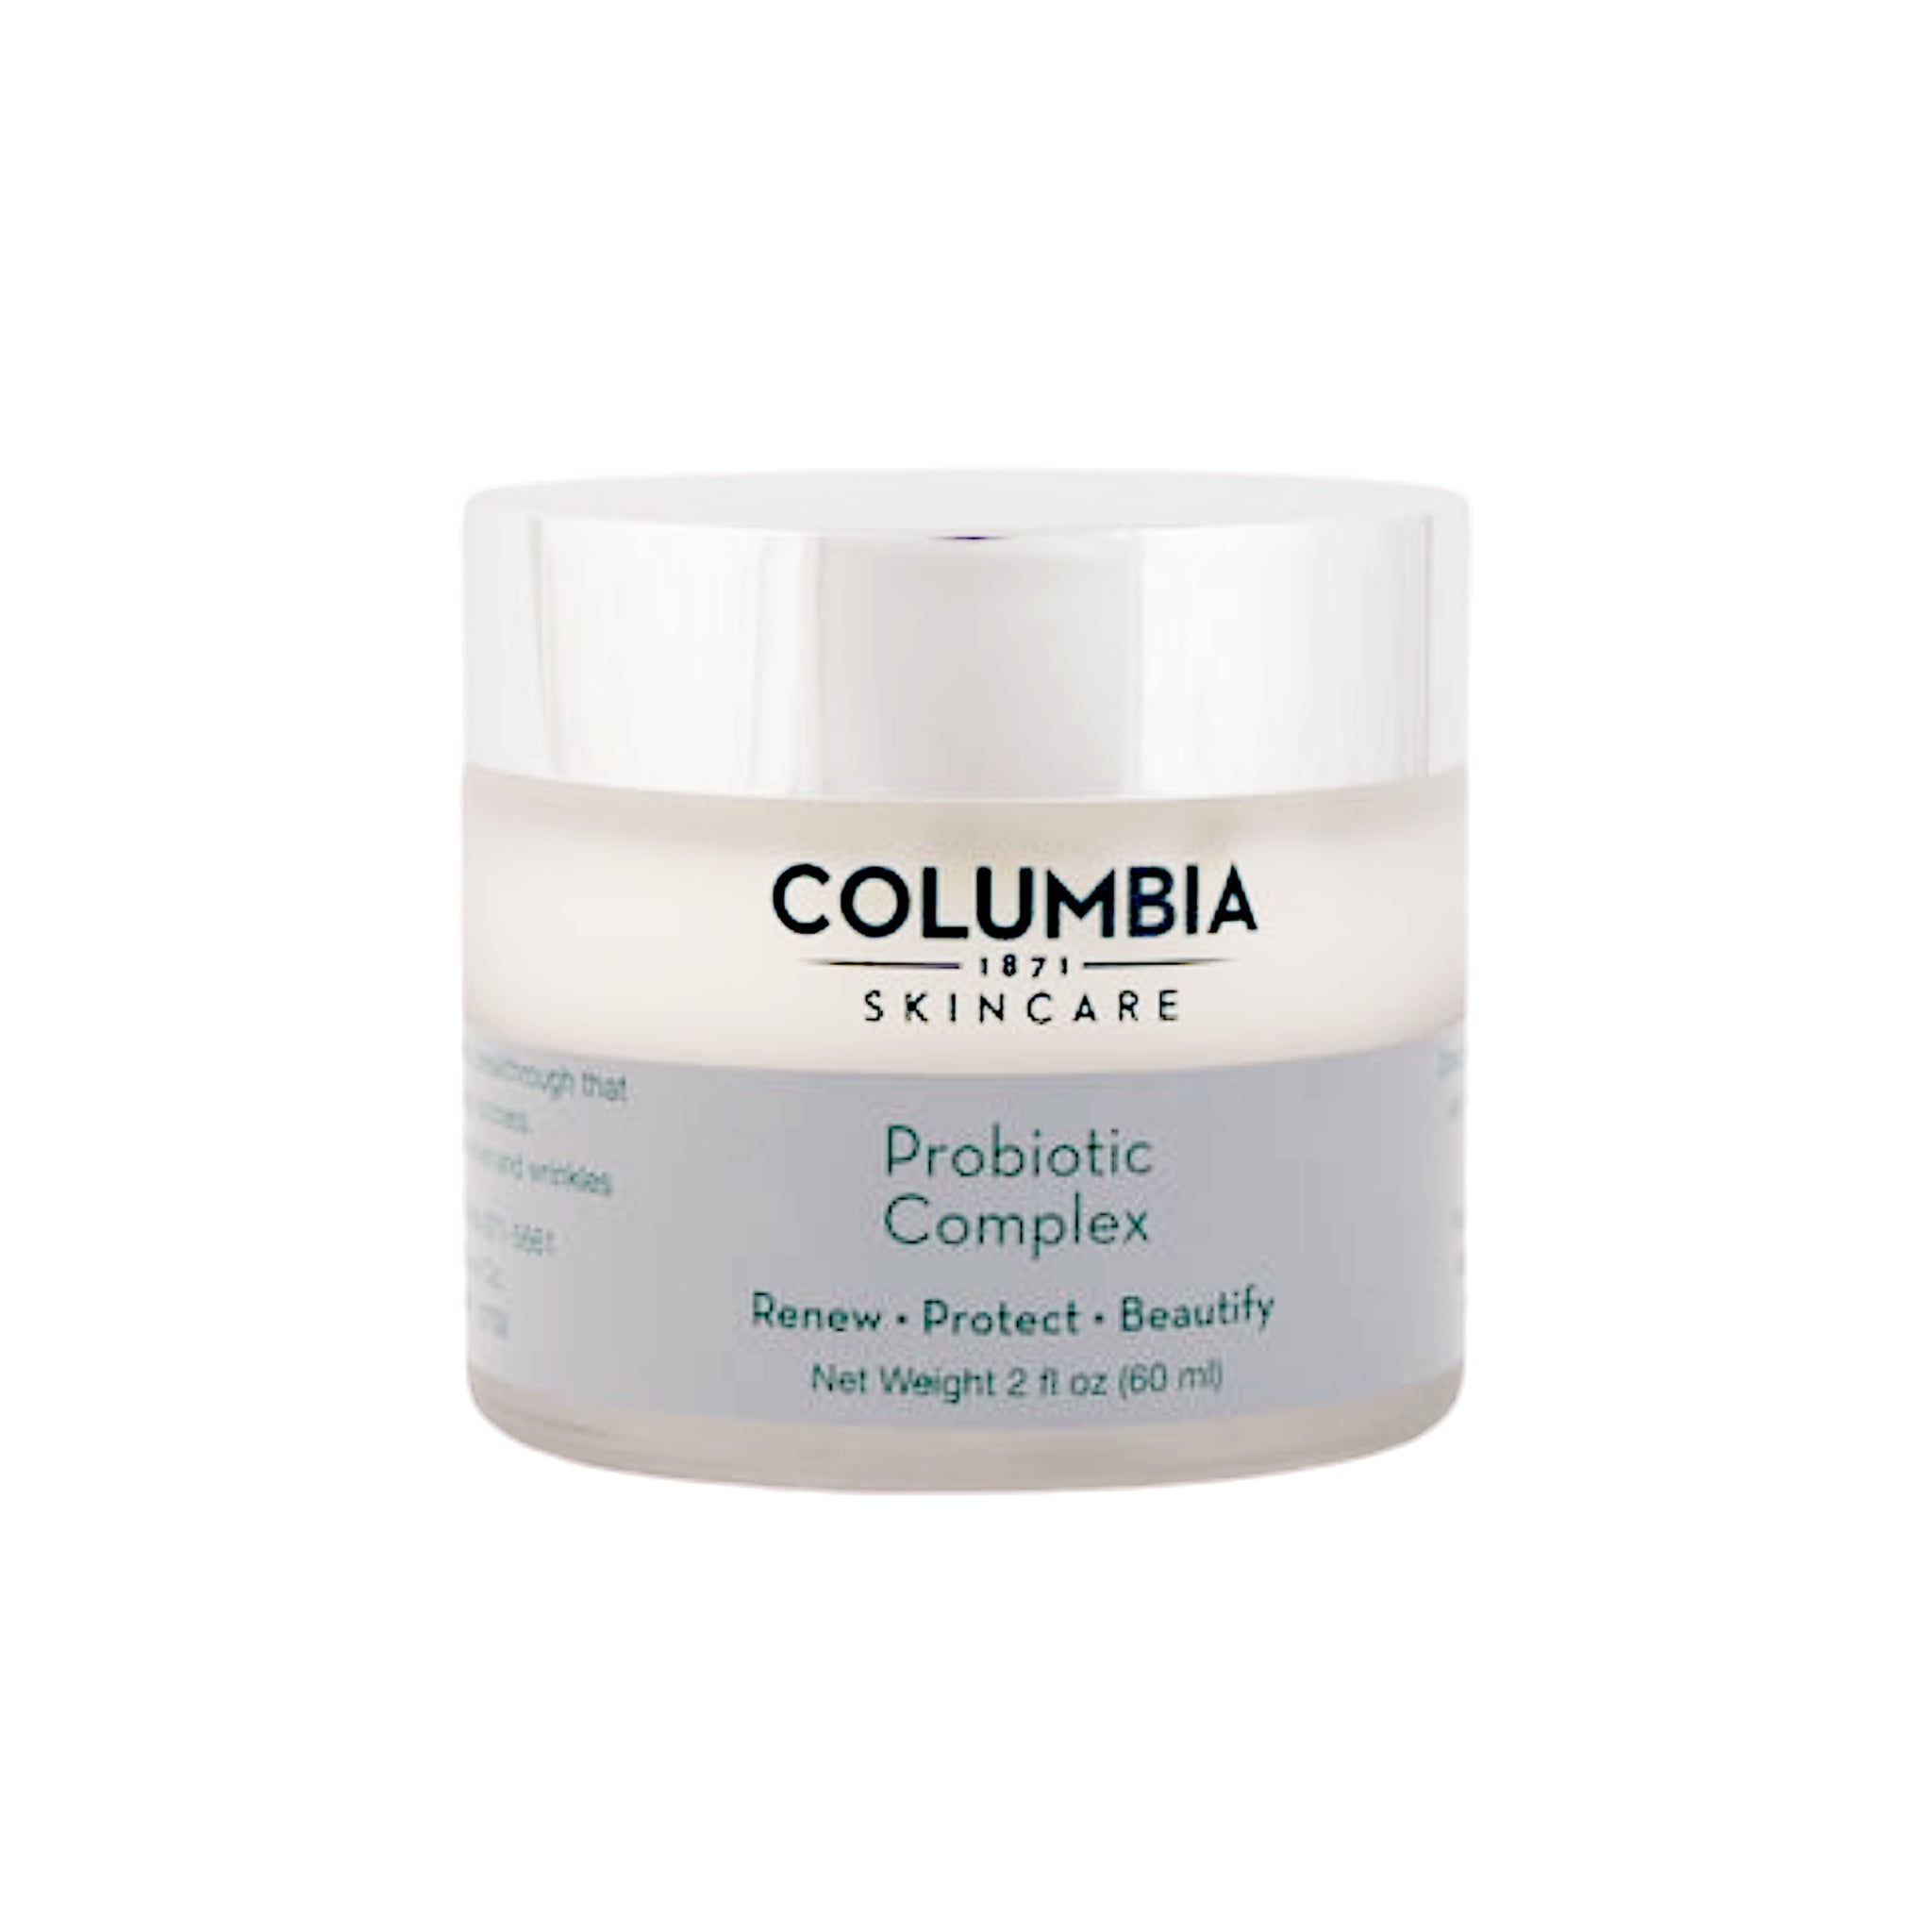 COLUMBIA SKINCARE - Probiotic Complex - Beauty Nook